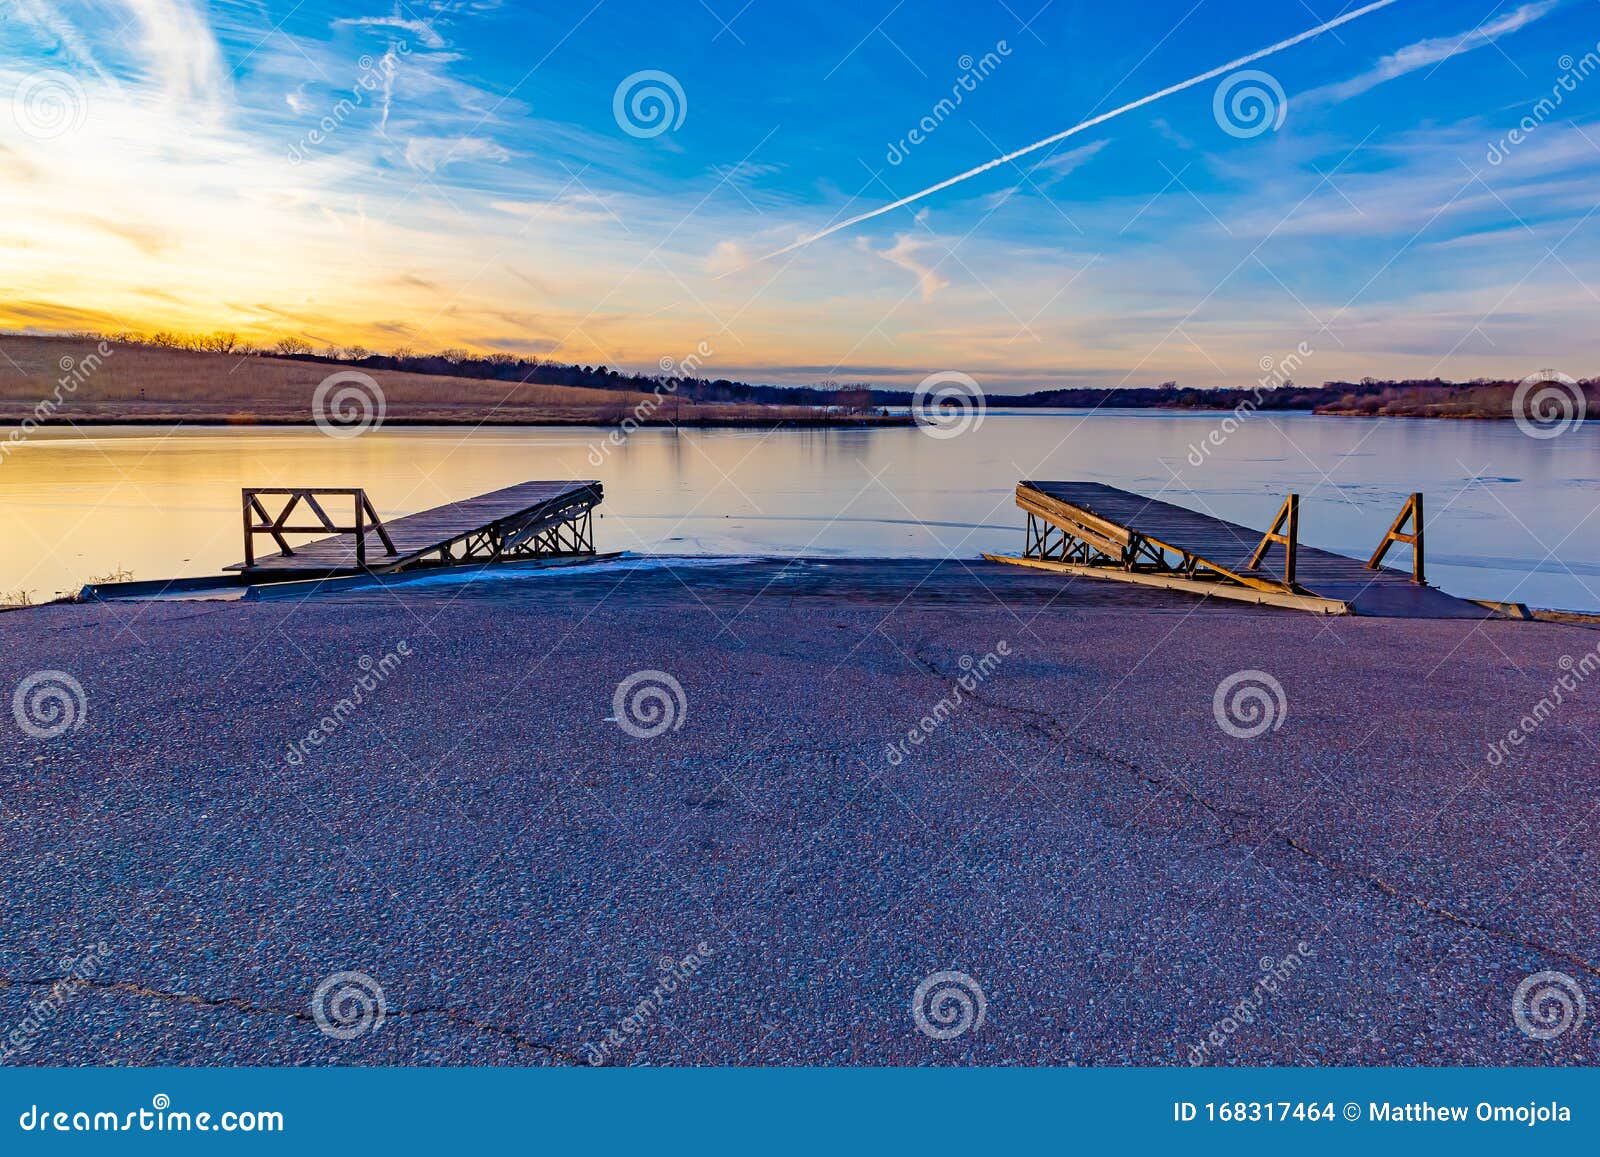 slipway or boat ramp on ed zorinsky lake at sunset stock